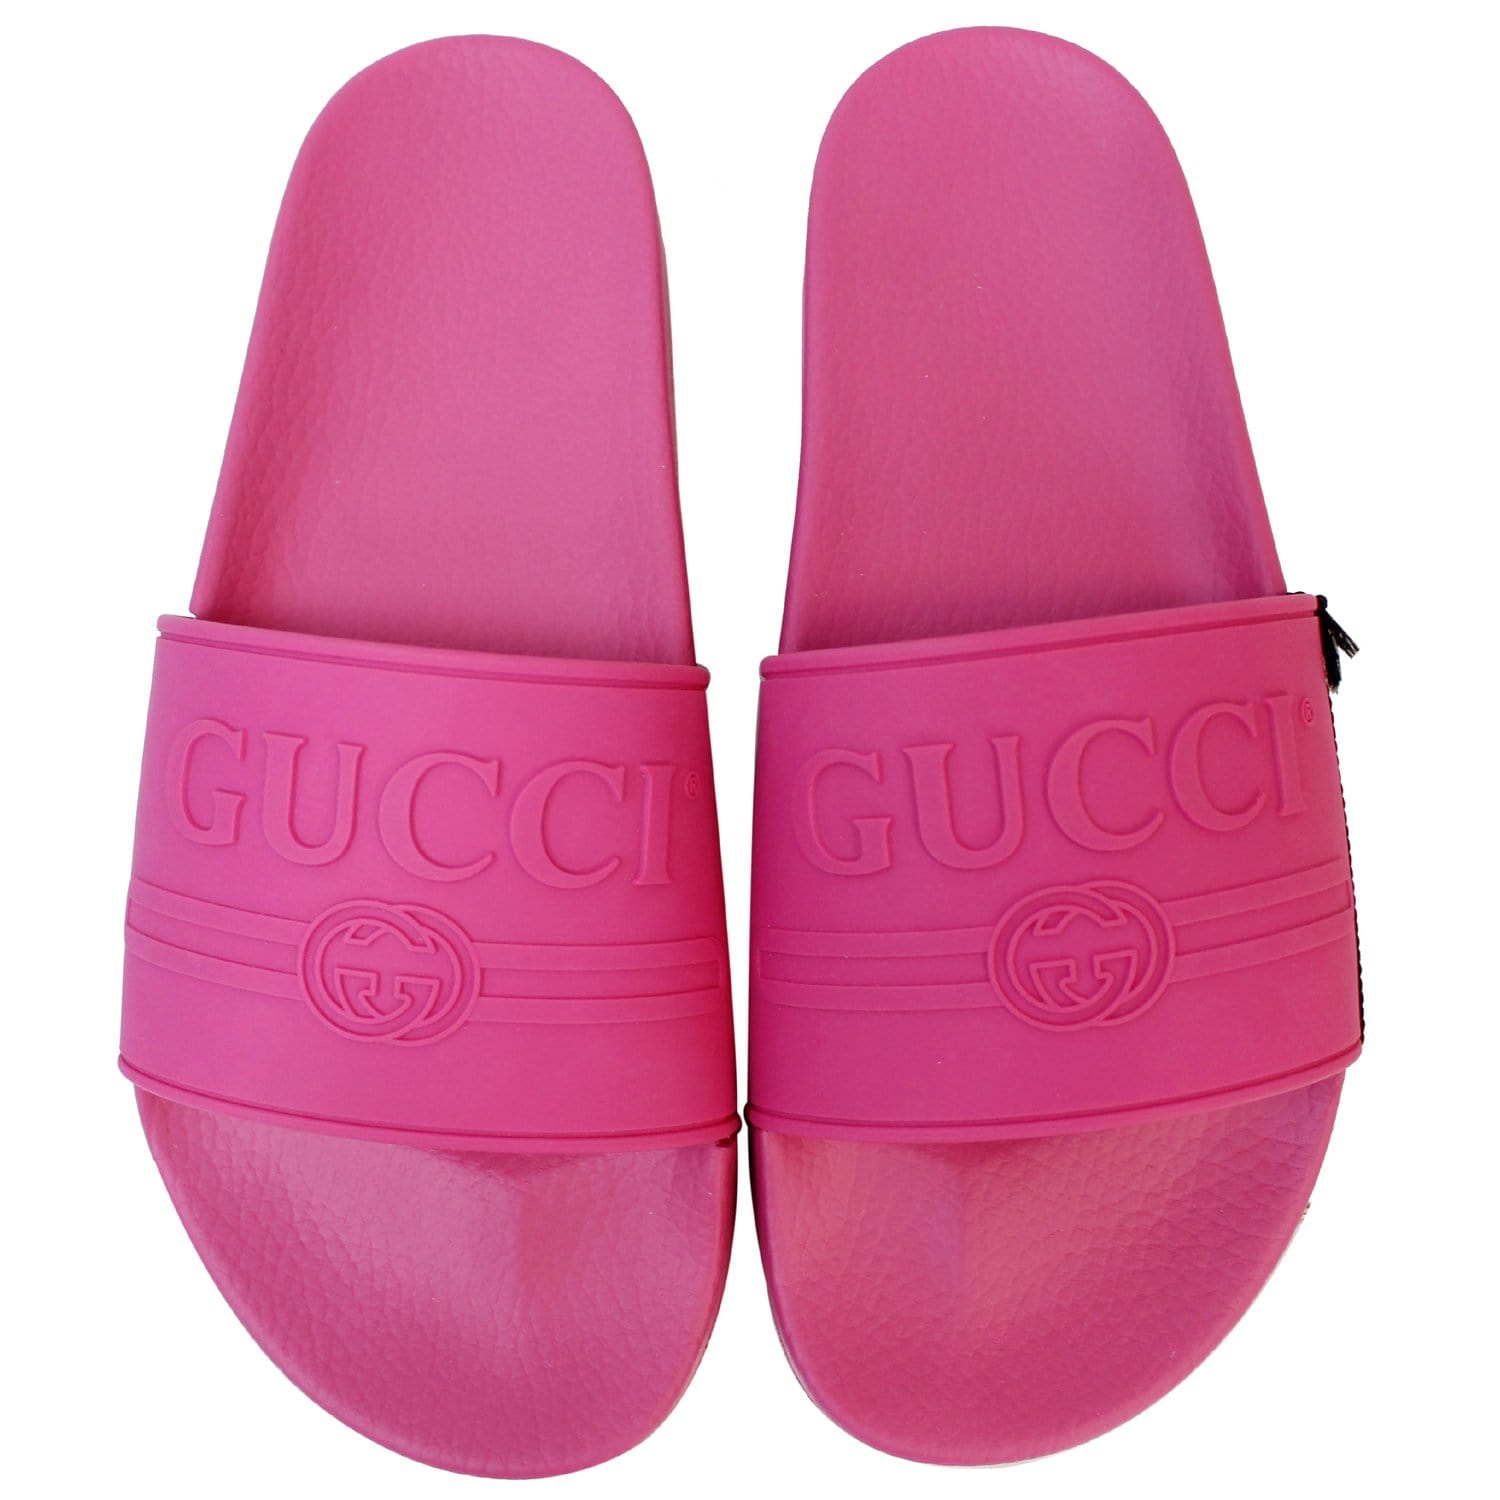 Gucci Men's Slide with Gucci Logo